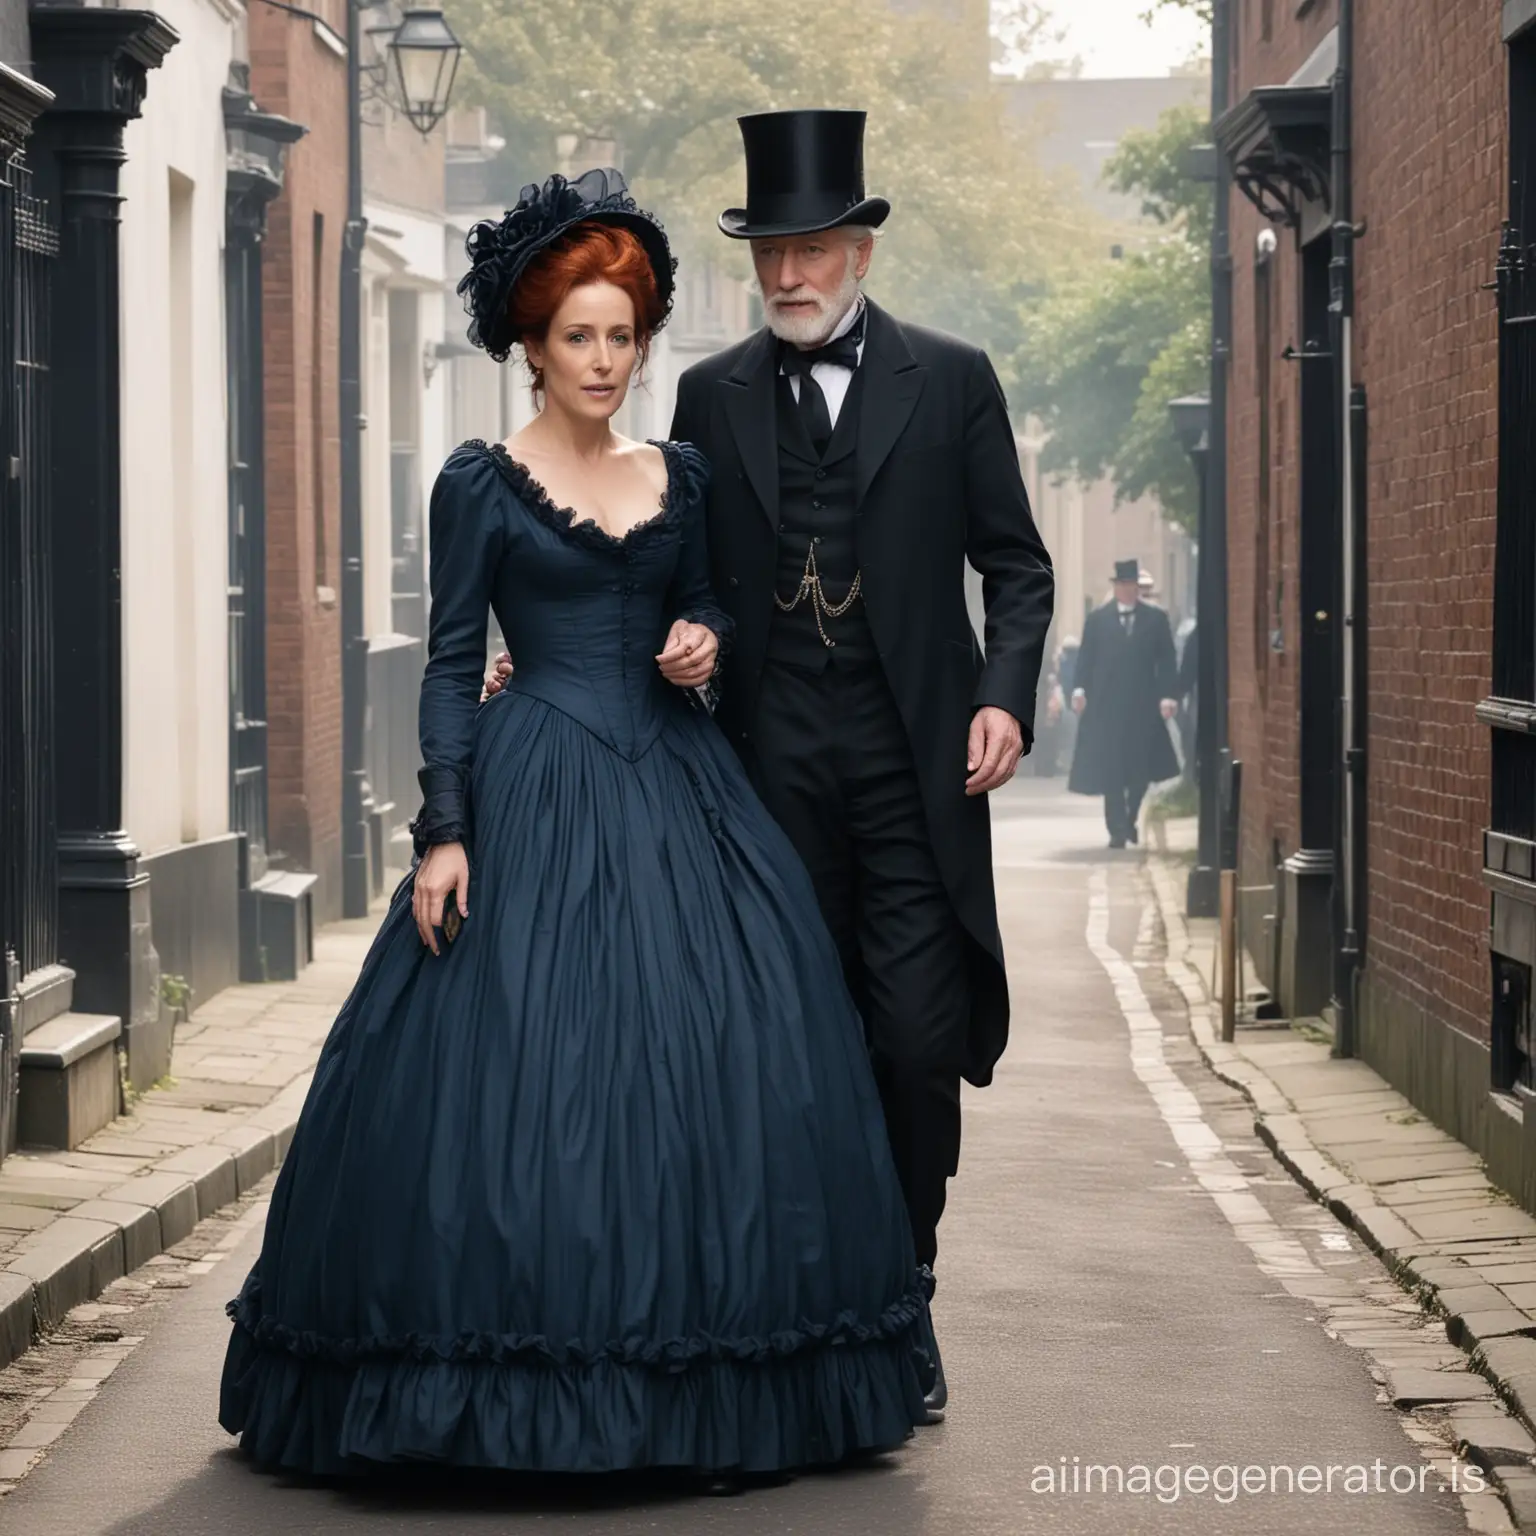 Victorian-Bride-Walking-with-Groom-on-19th-Century-Street